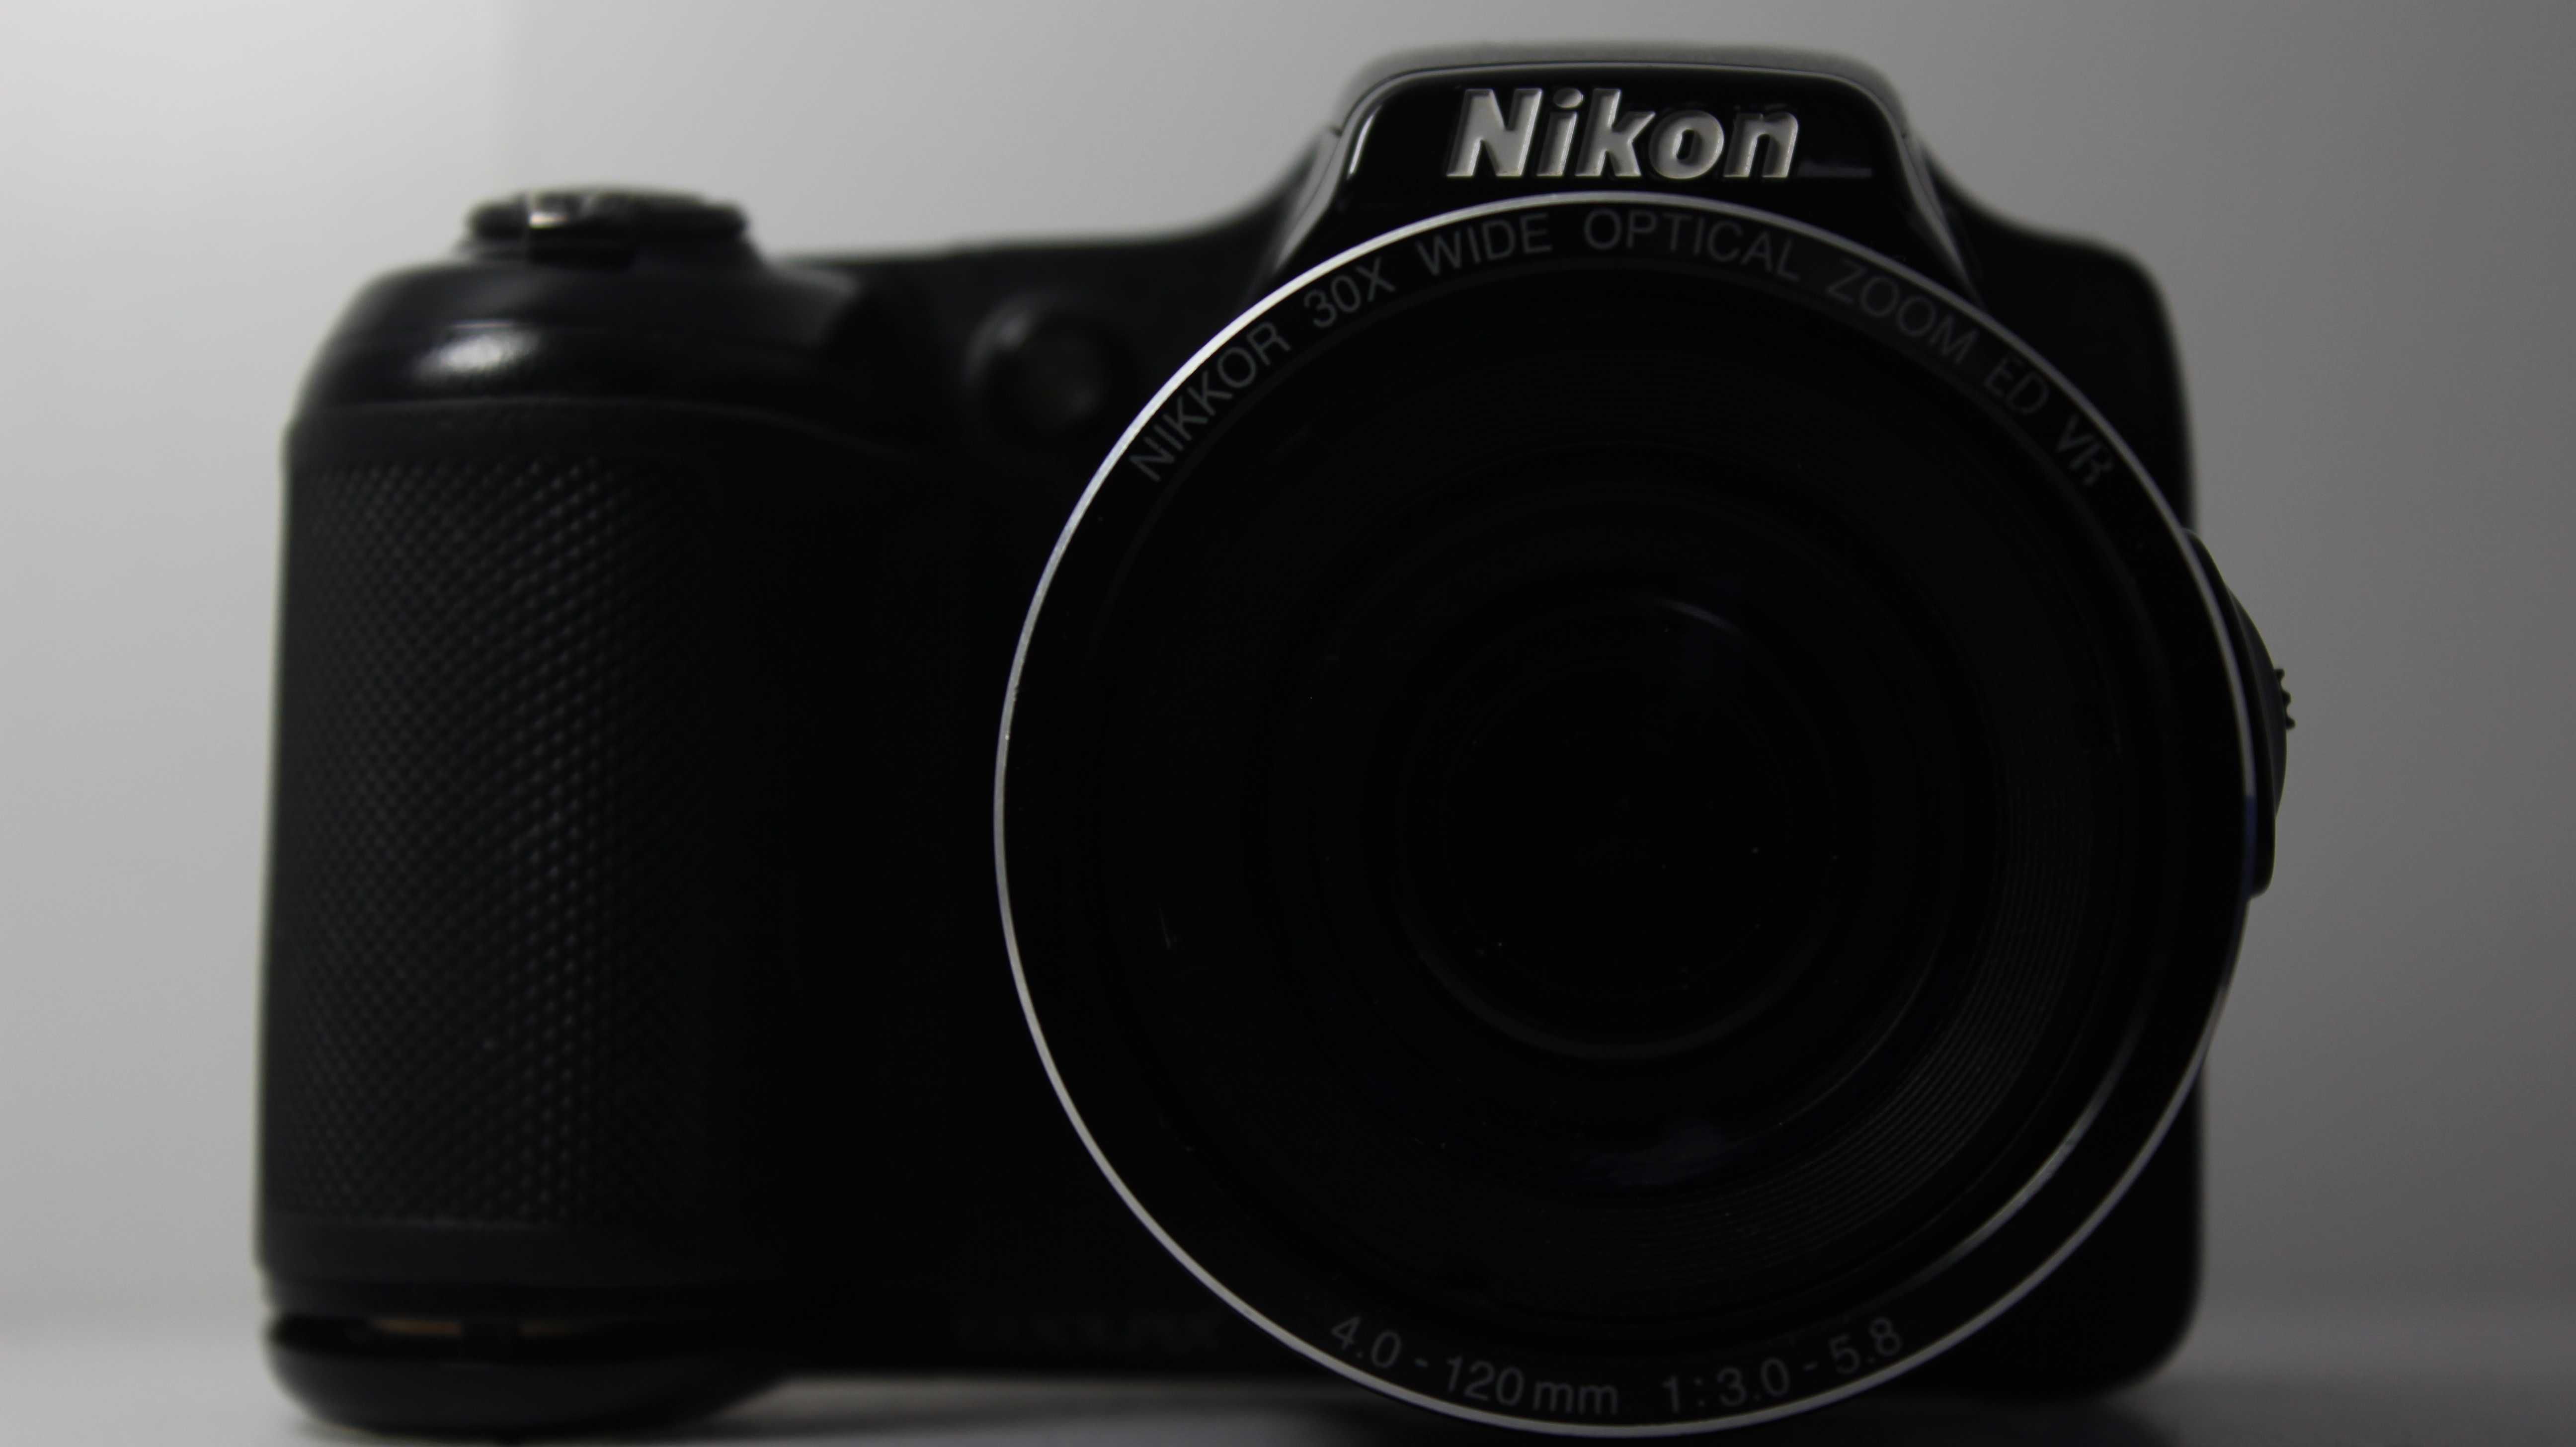 Vând un Nikon Coolpix l820 perfect funcțional